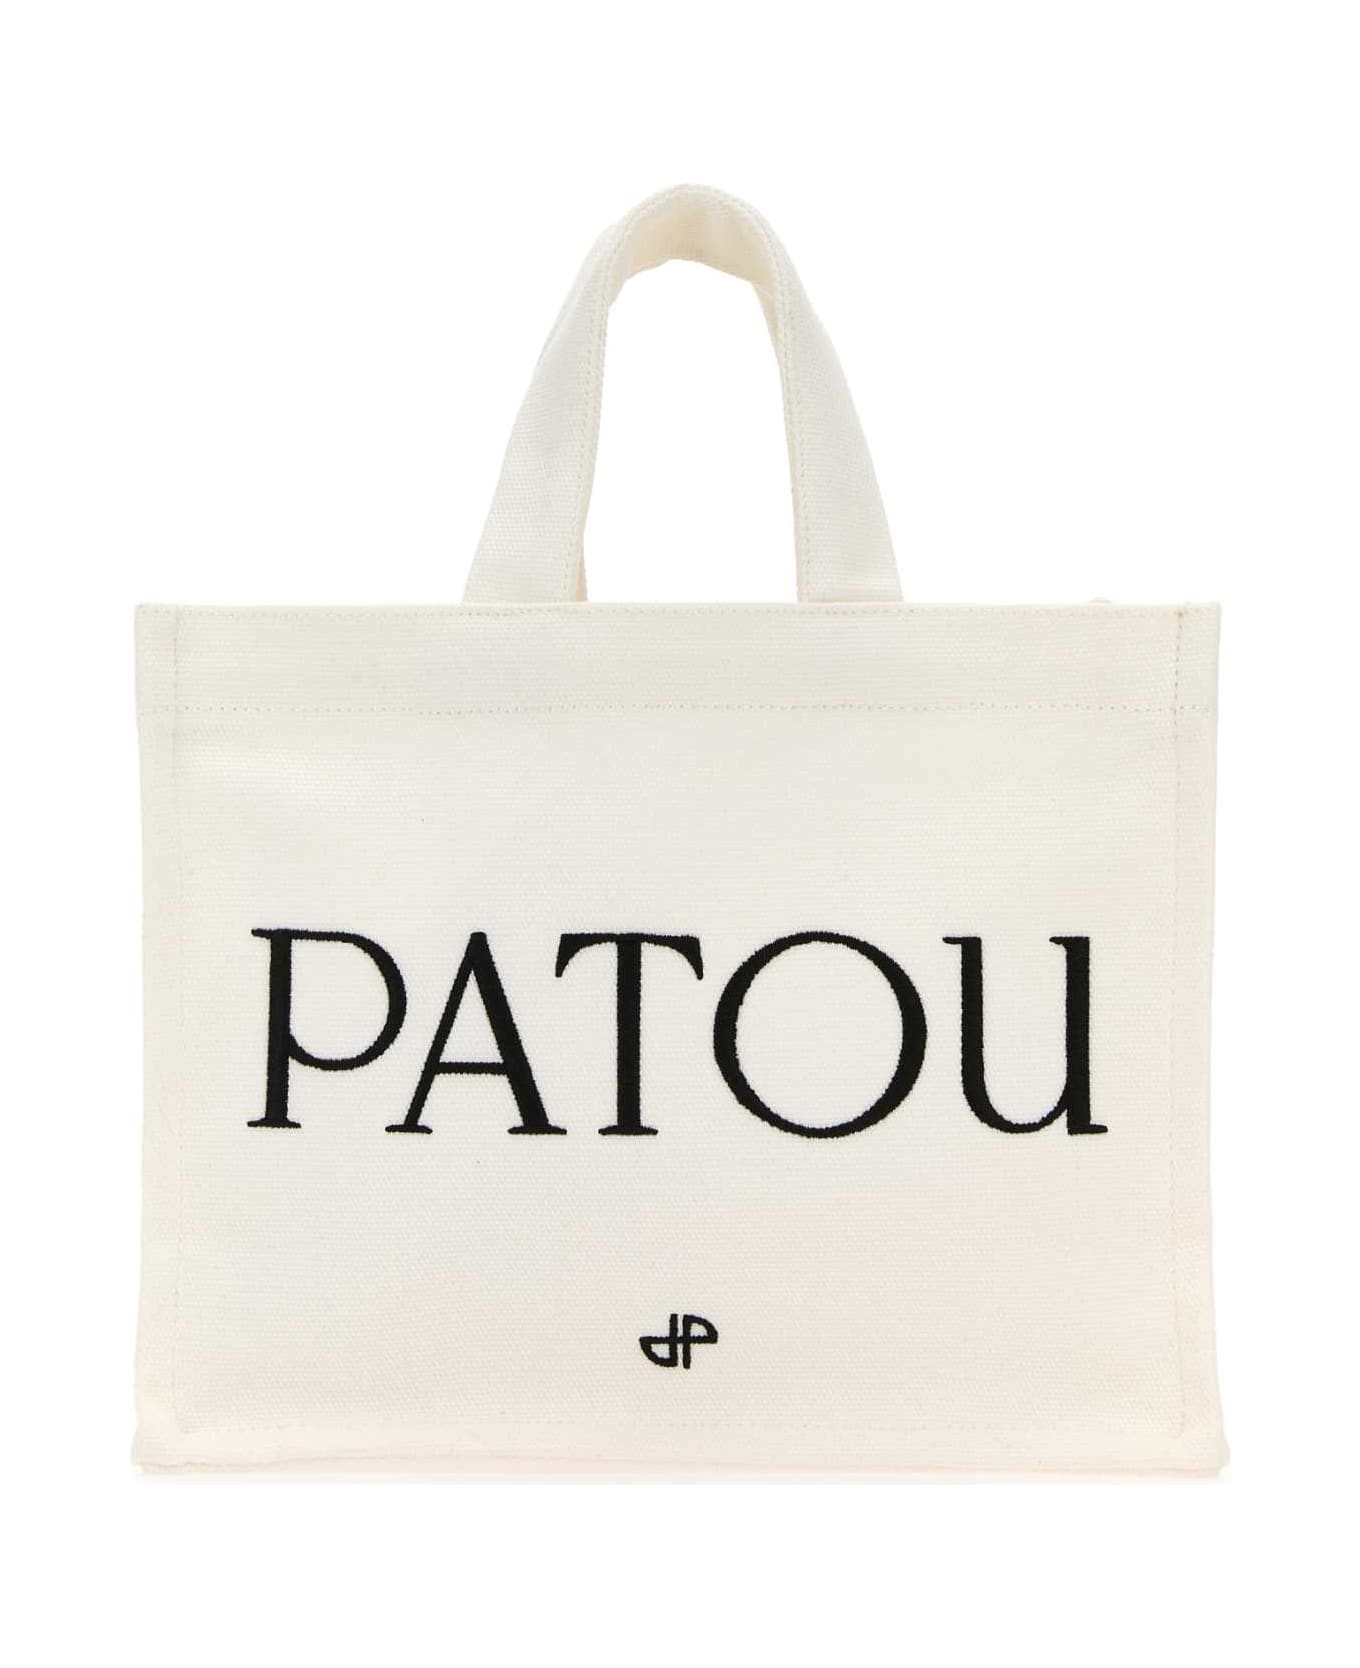 Patou White Canvas Small Tote Patou Shopping Bag - WHITE